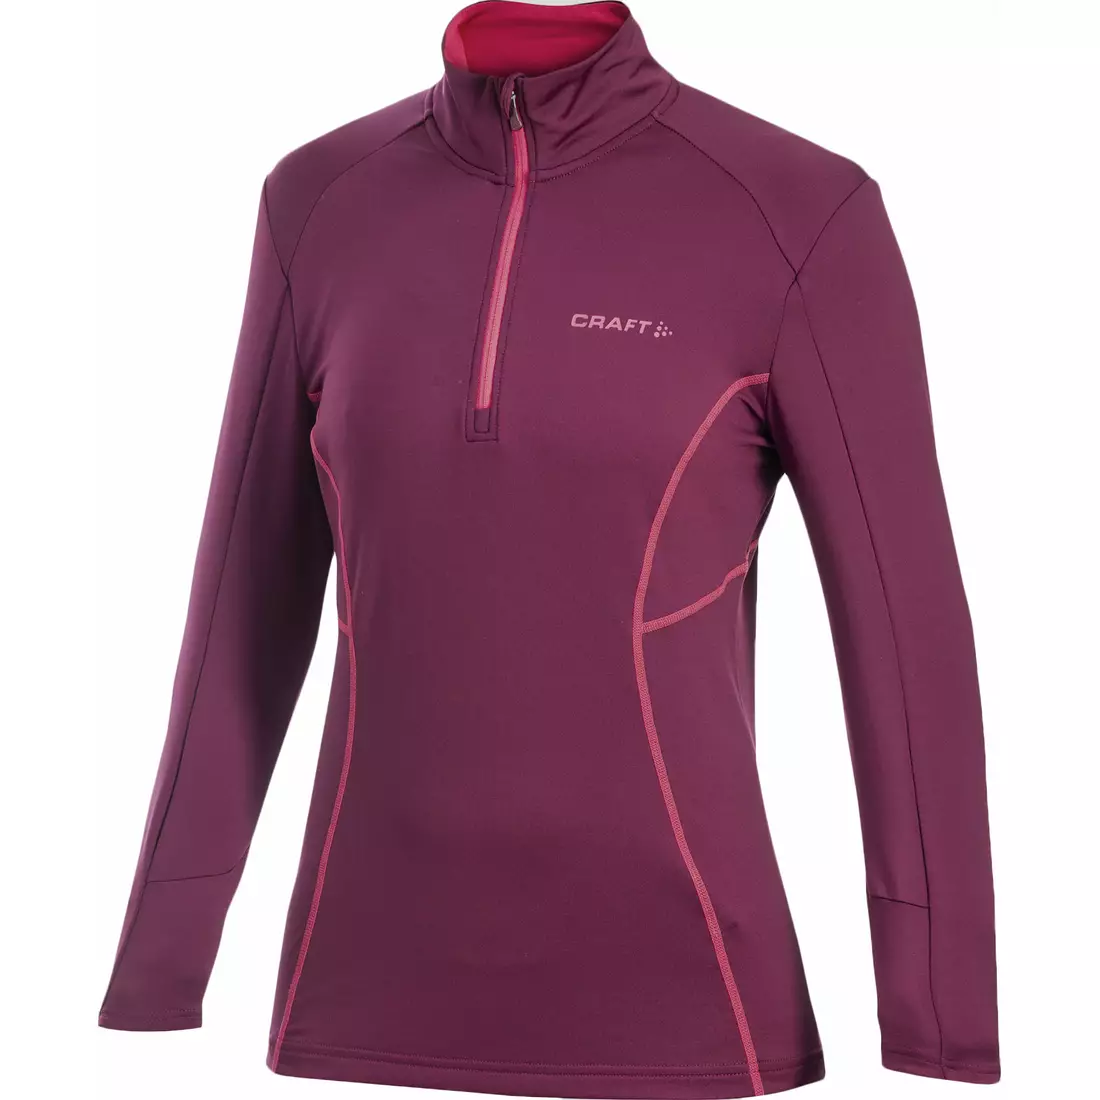 CRAFT Lightweight Stretch Pullover - lightweight women's sports sweatshirt 1902875-2465, color: burgundy